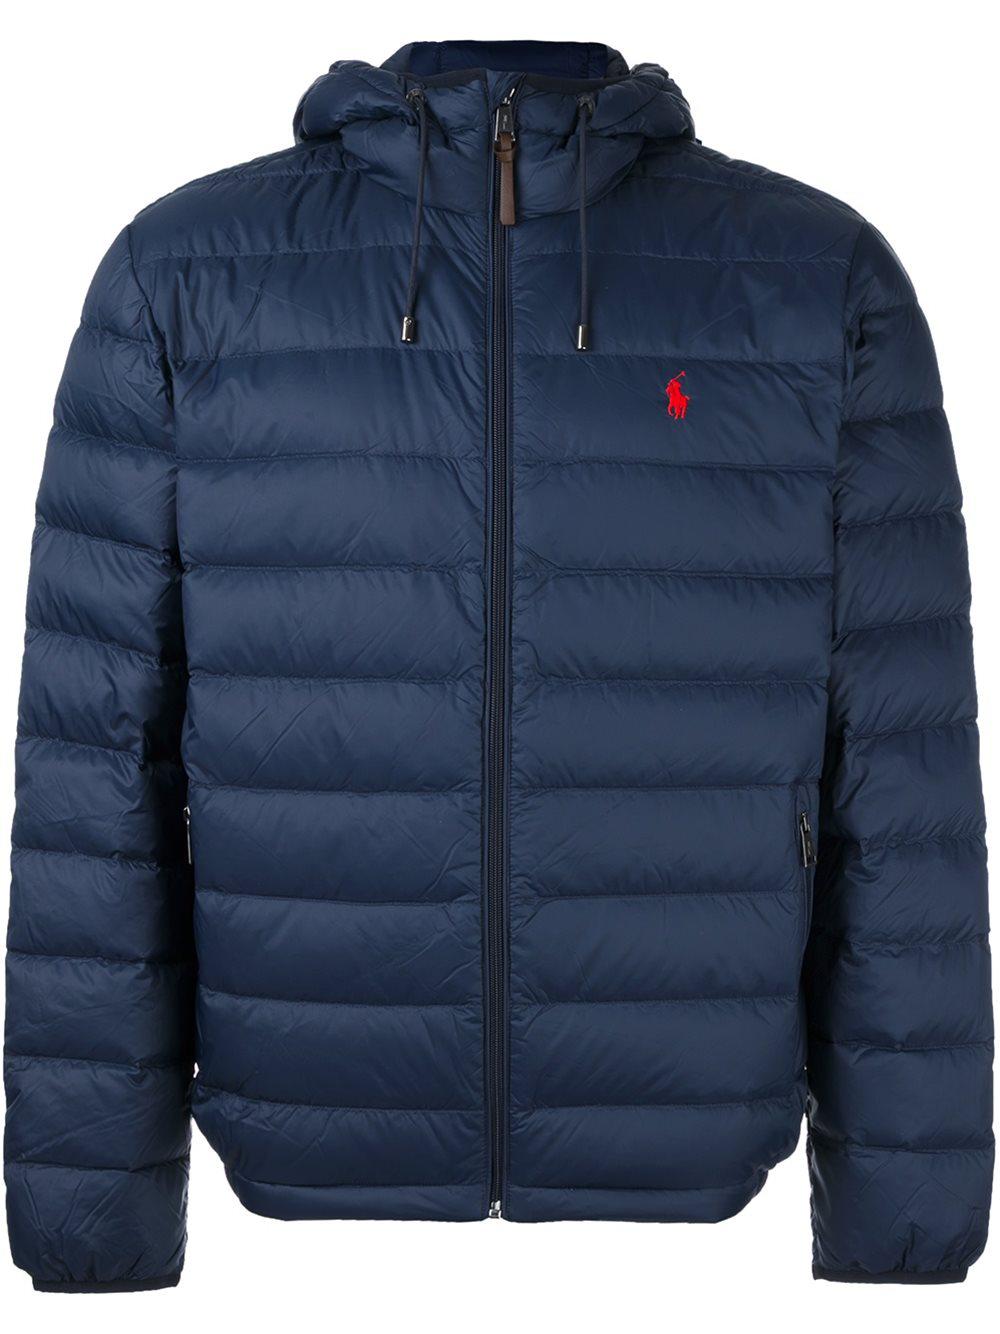 Polo Ralph Lauren Synthetic Nylon Hooded Jacket in Blue for Men - Lyst